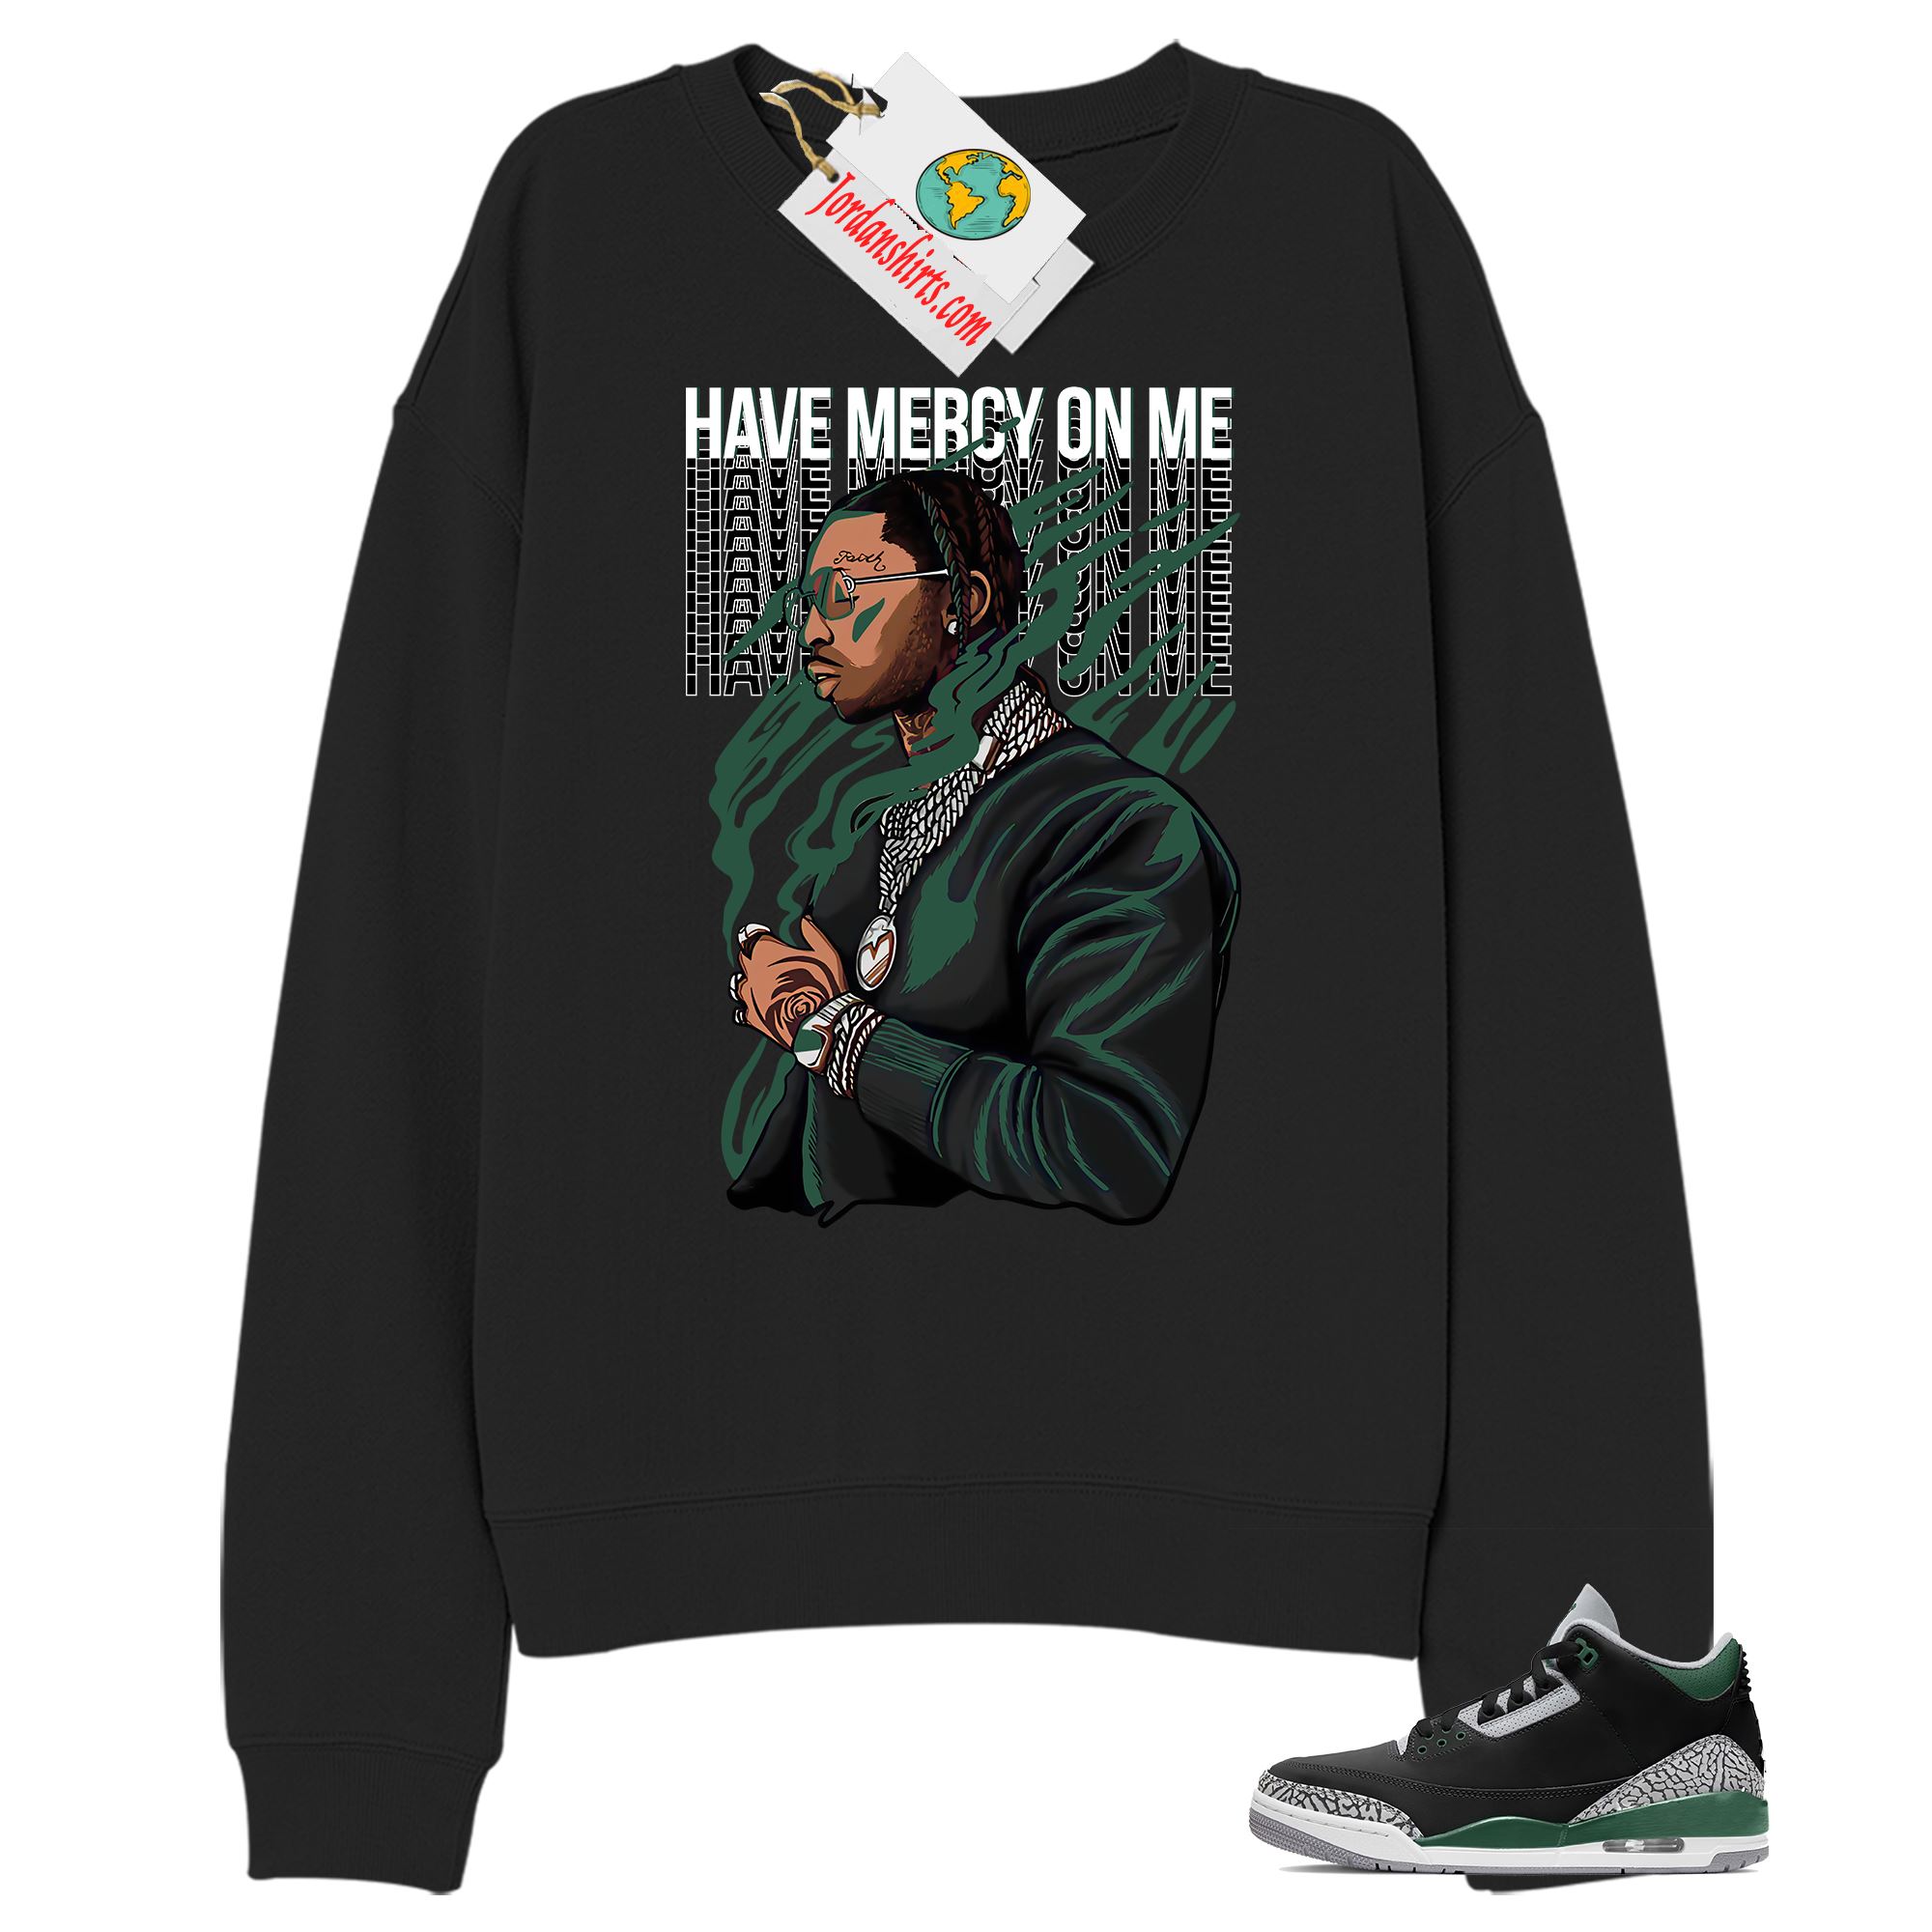 Jordan 3 Sweatshirt, Have Mercy On Me Black Sweatshirt Air Jordan 3 Pine Green 3s Plus Size Up To 5xl